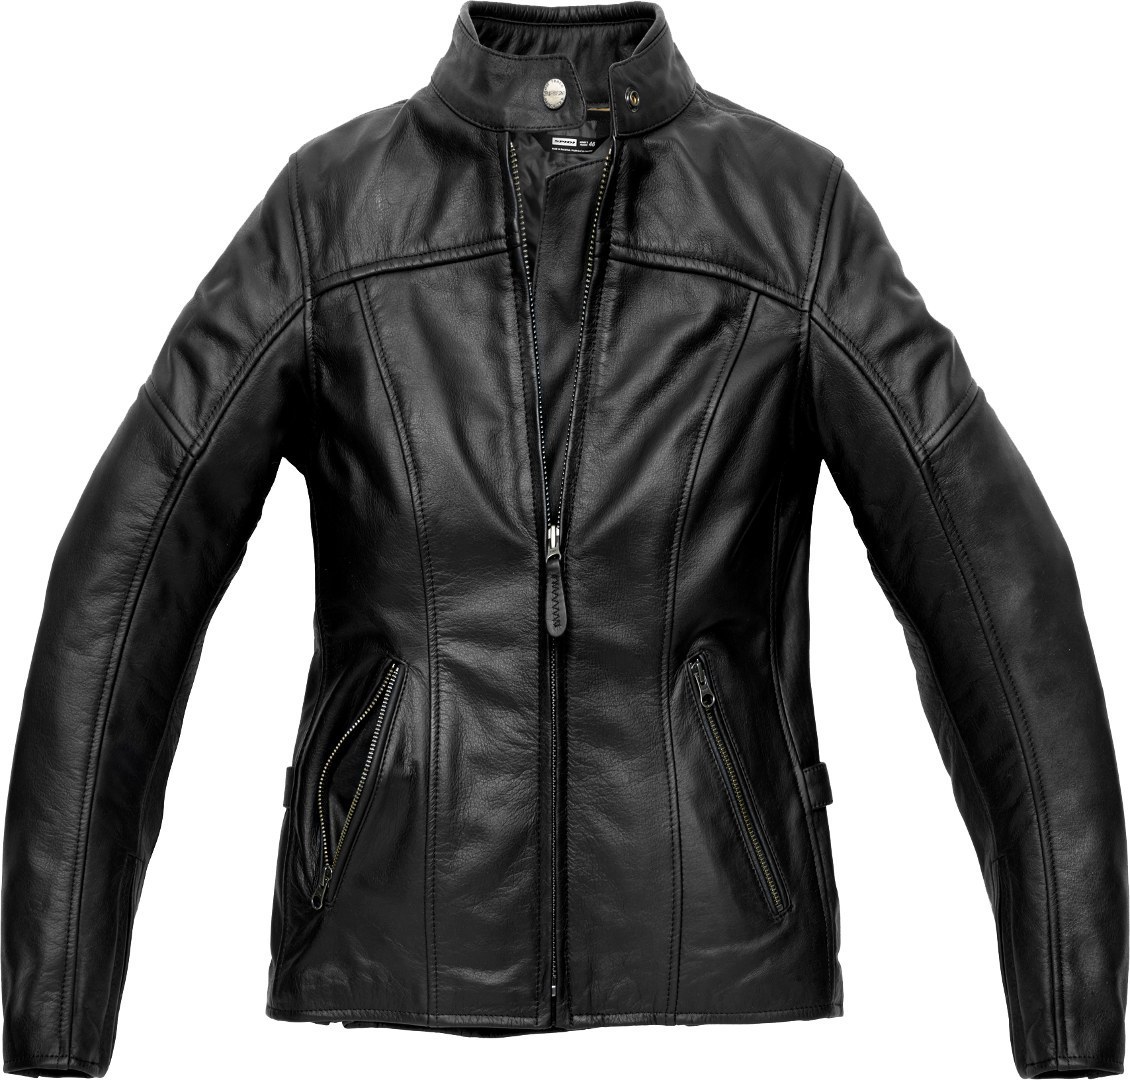 Spidi Mack Ladies Motorcycle Leather Jacket, black, Size 42 for Women, black, Size 42 for Women